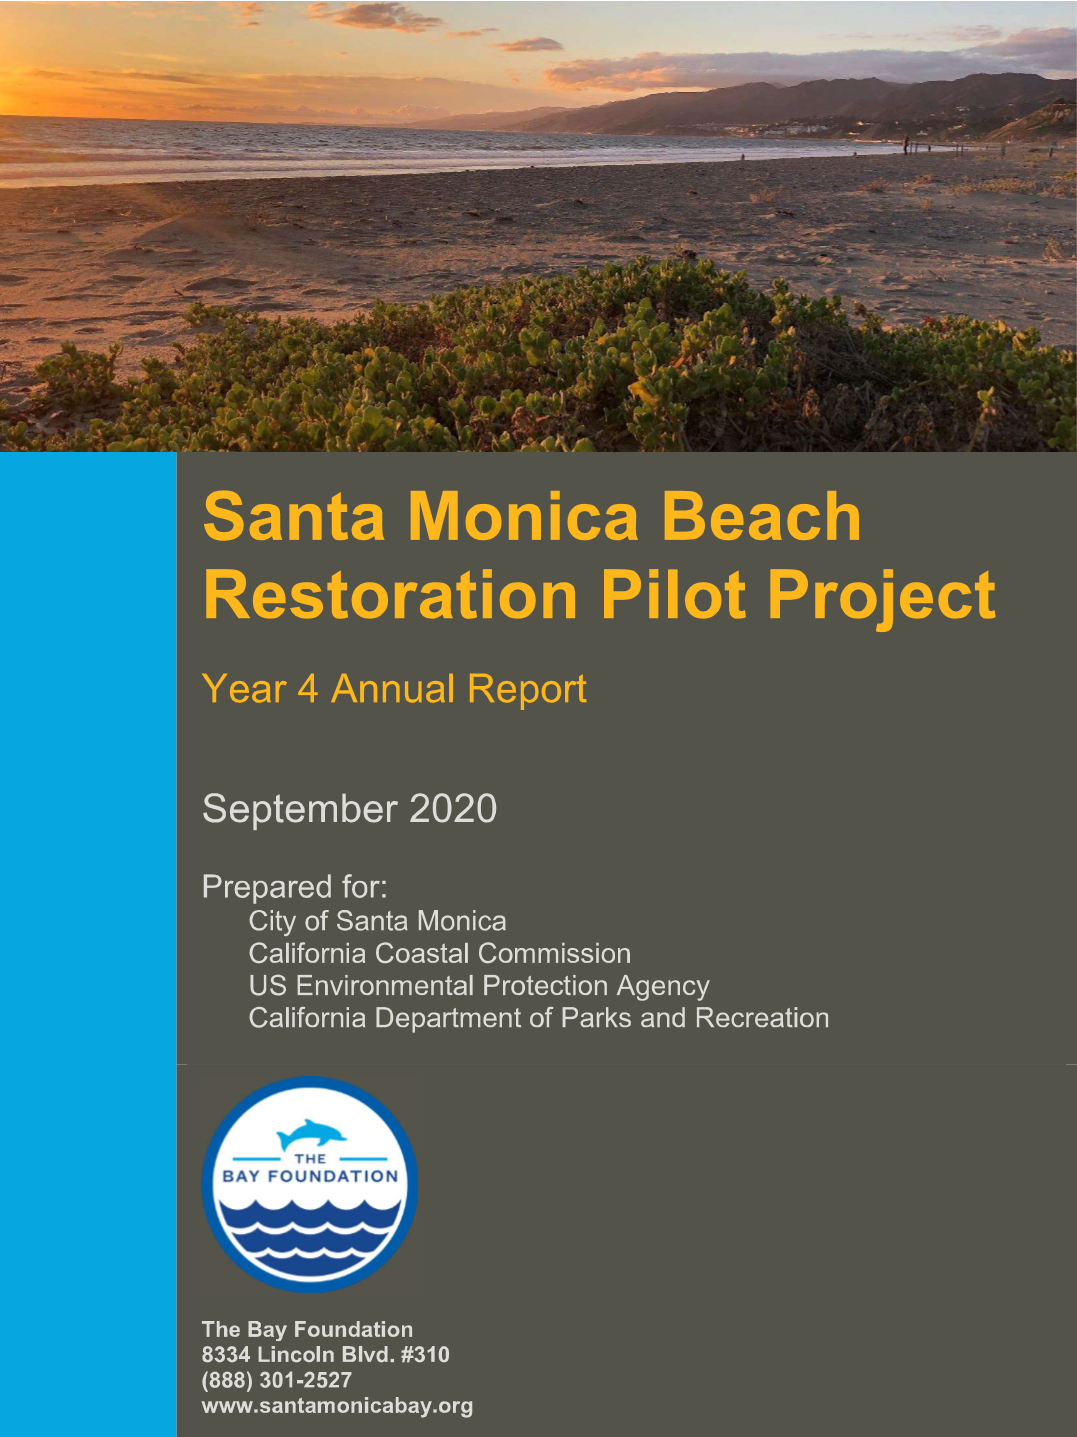 Santa Monica Beach Restoration Pilot Project Year 4 Annual Report